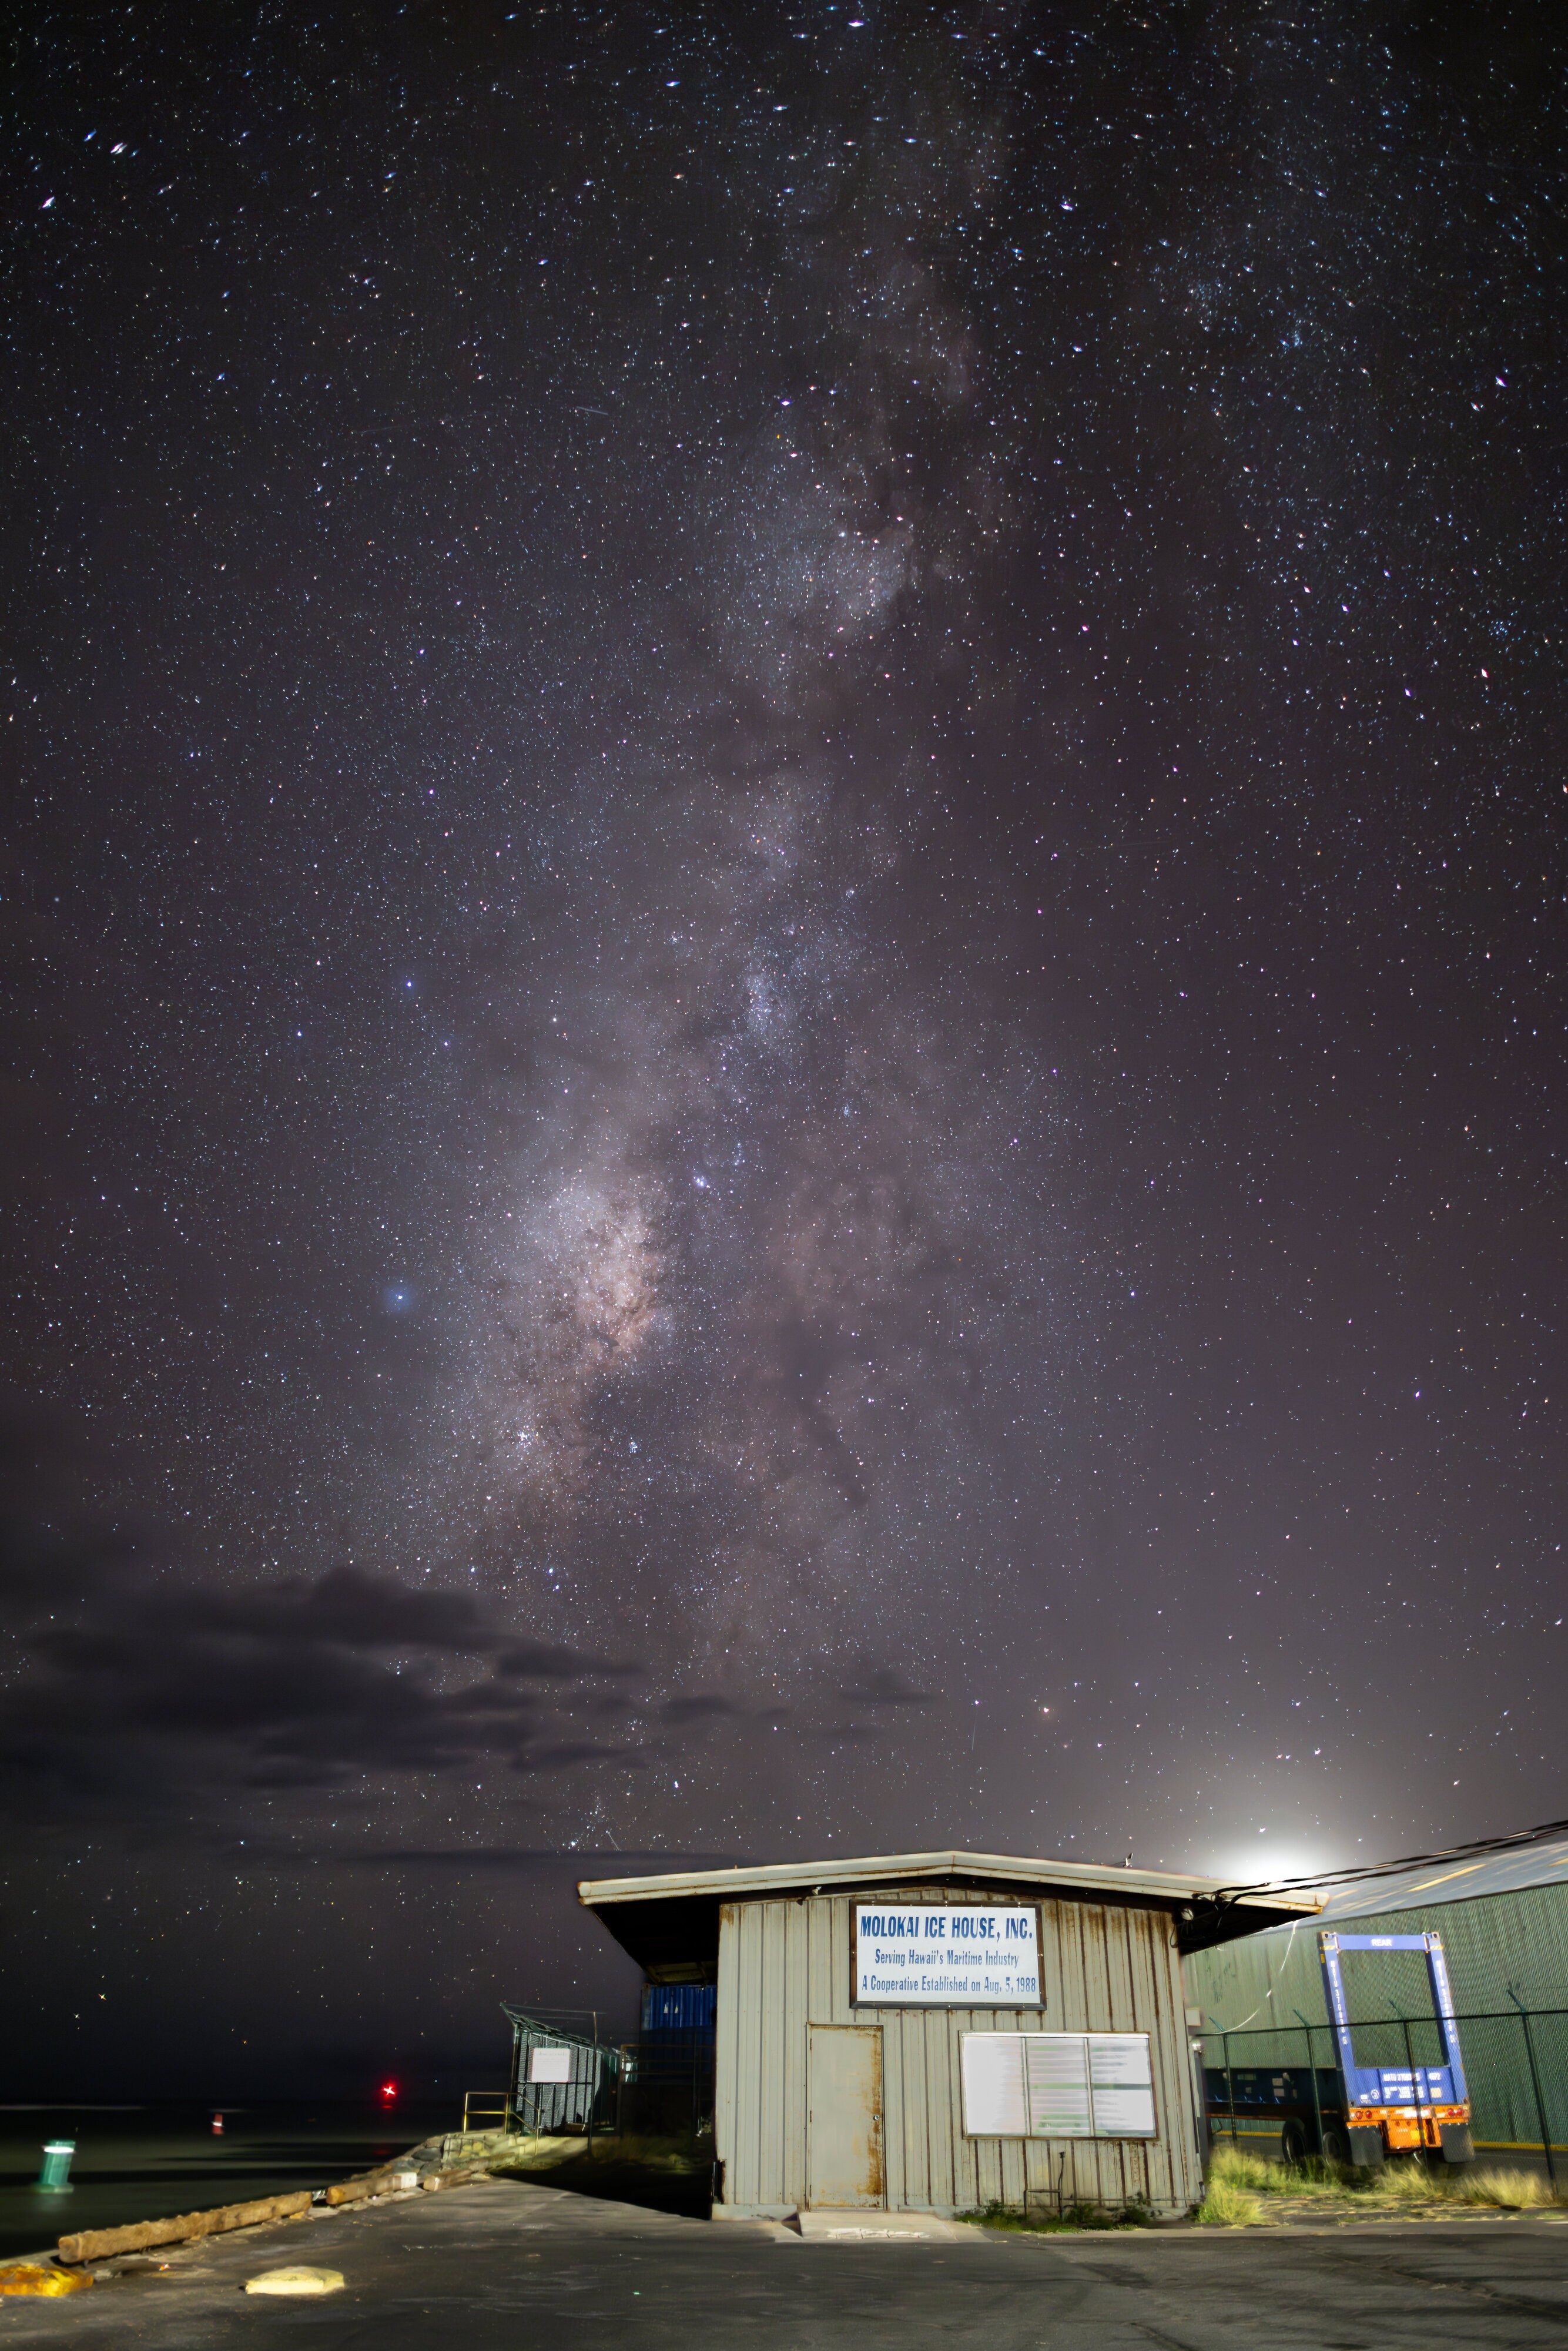 Milky Way over the Ice House on the Kaunakakai Wharf, Molokai, Hawaii